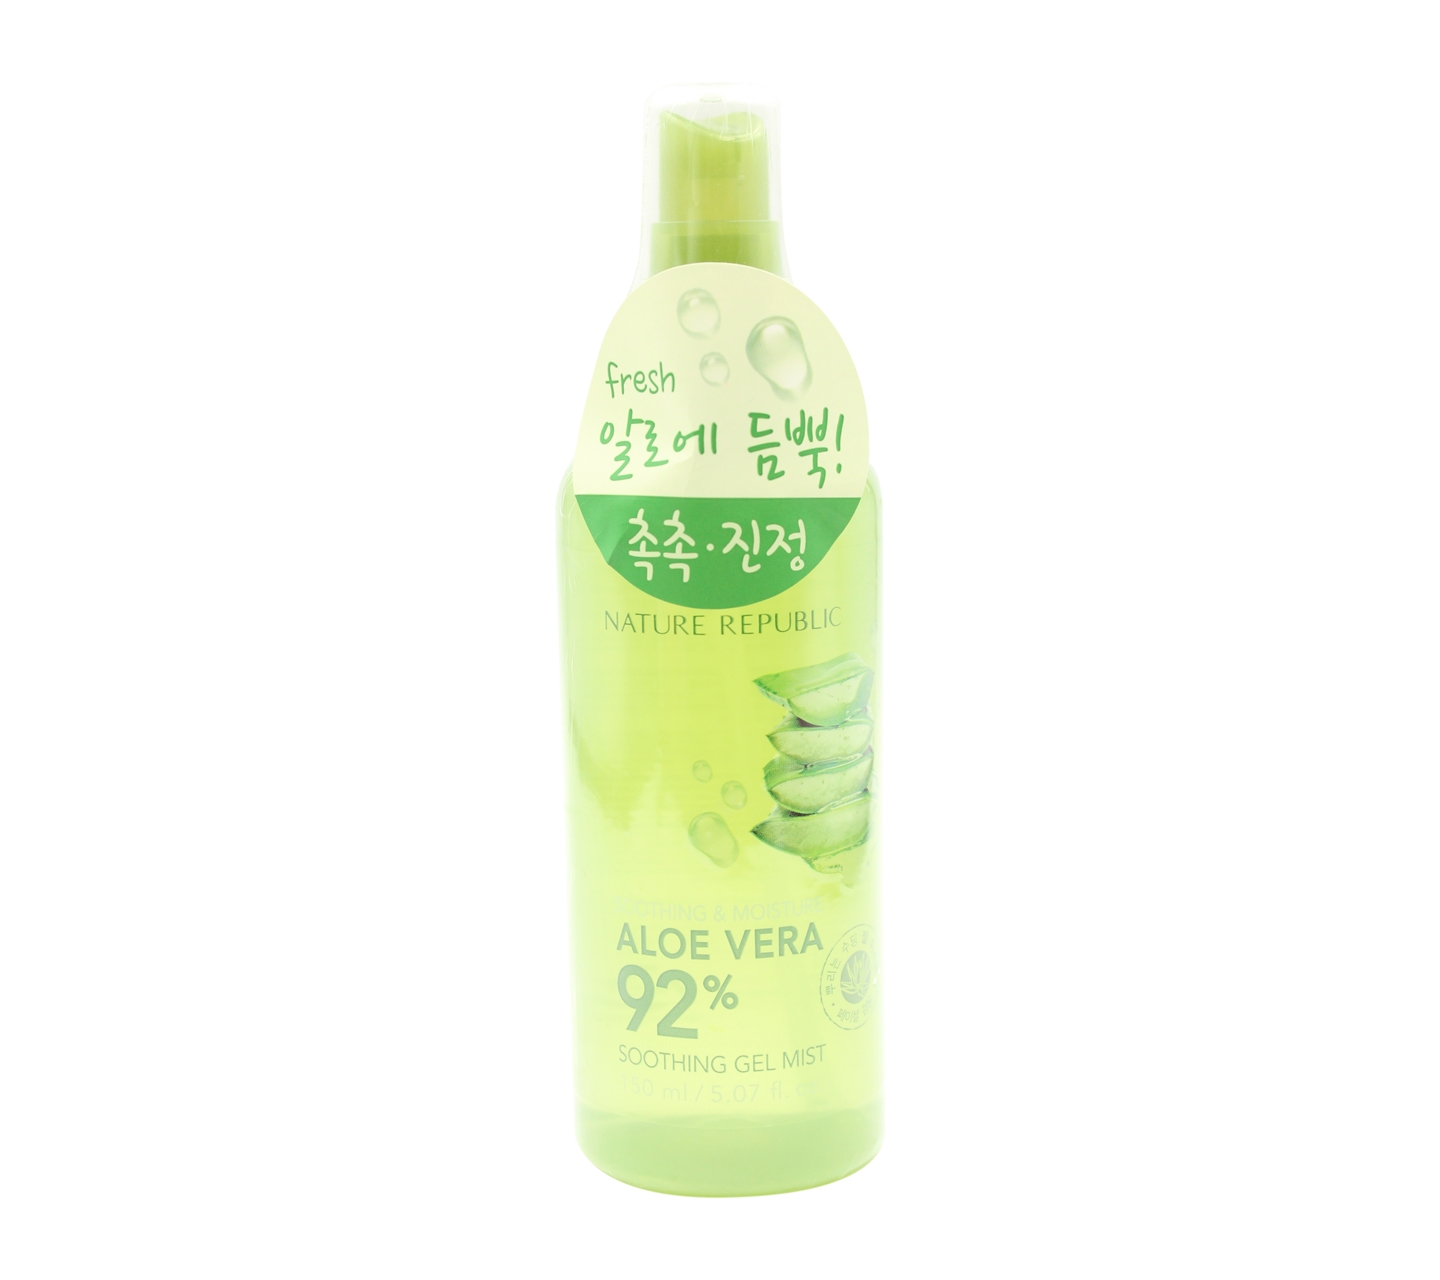 Nature Republic Aloe Vera 92% Sooting Gel Mist Skin Care